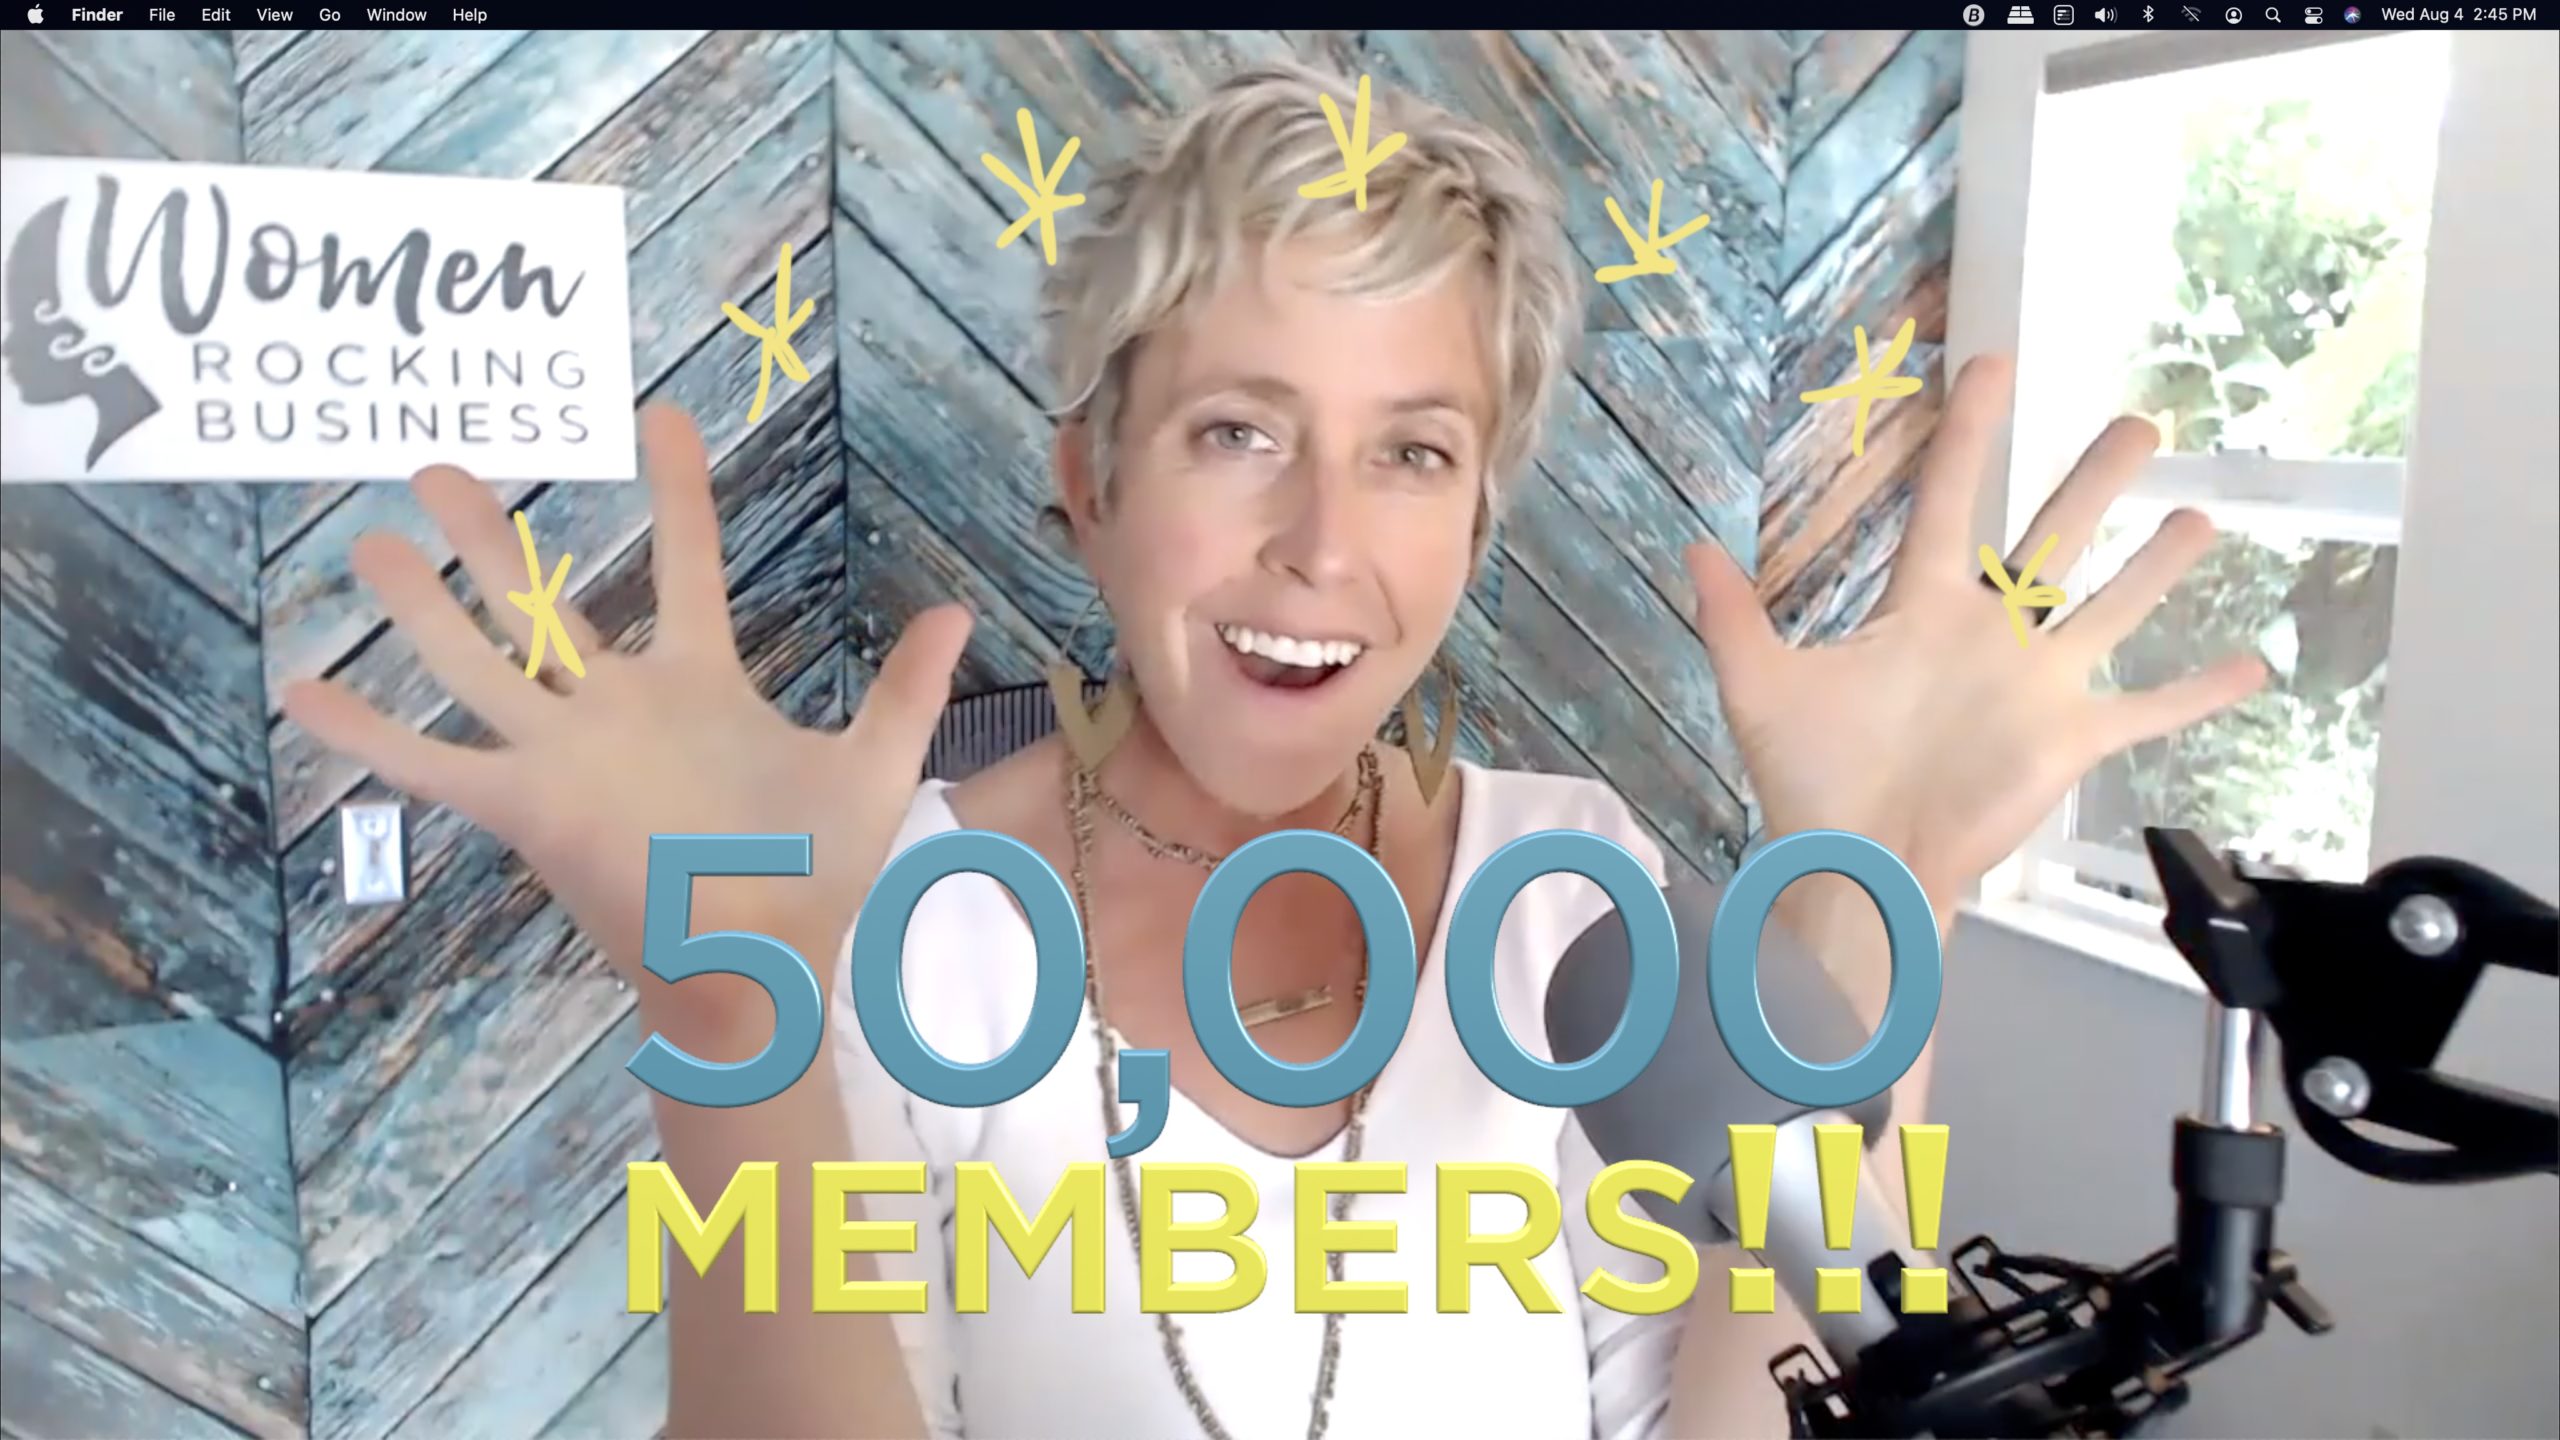 Women Rocking BusinessHow I Created a Community of 50,000 Women Entrepreneurs [Video]